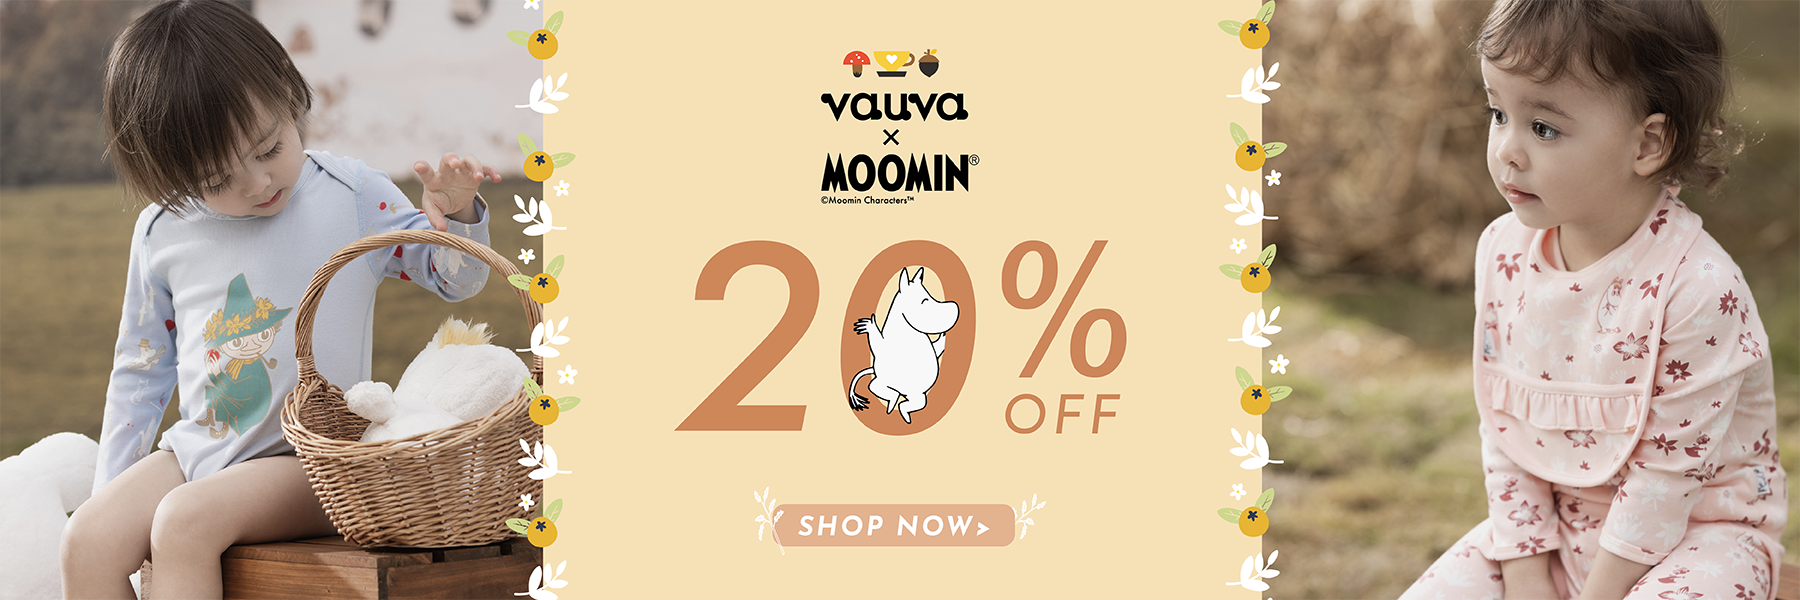 My Little Korner - Vauva x Moomin Collection 20%OFF Desktop Banner